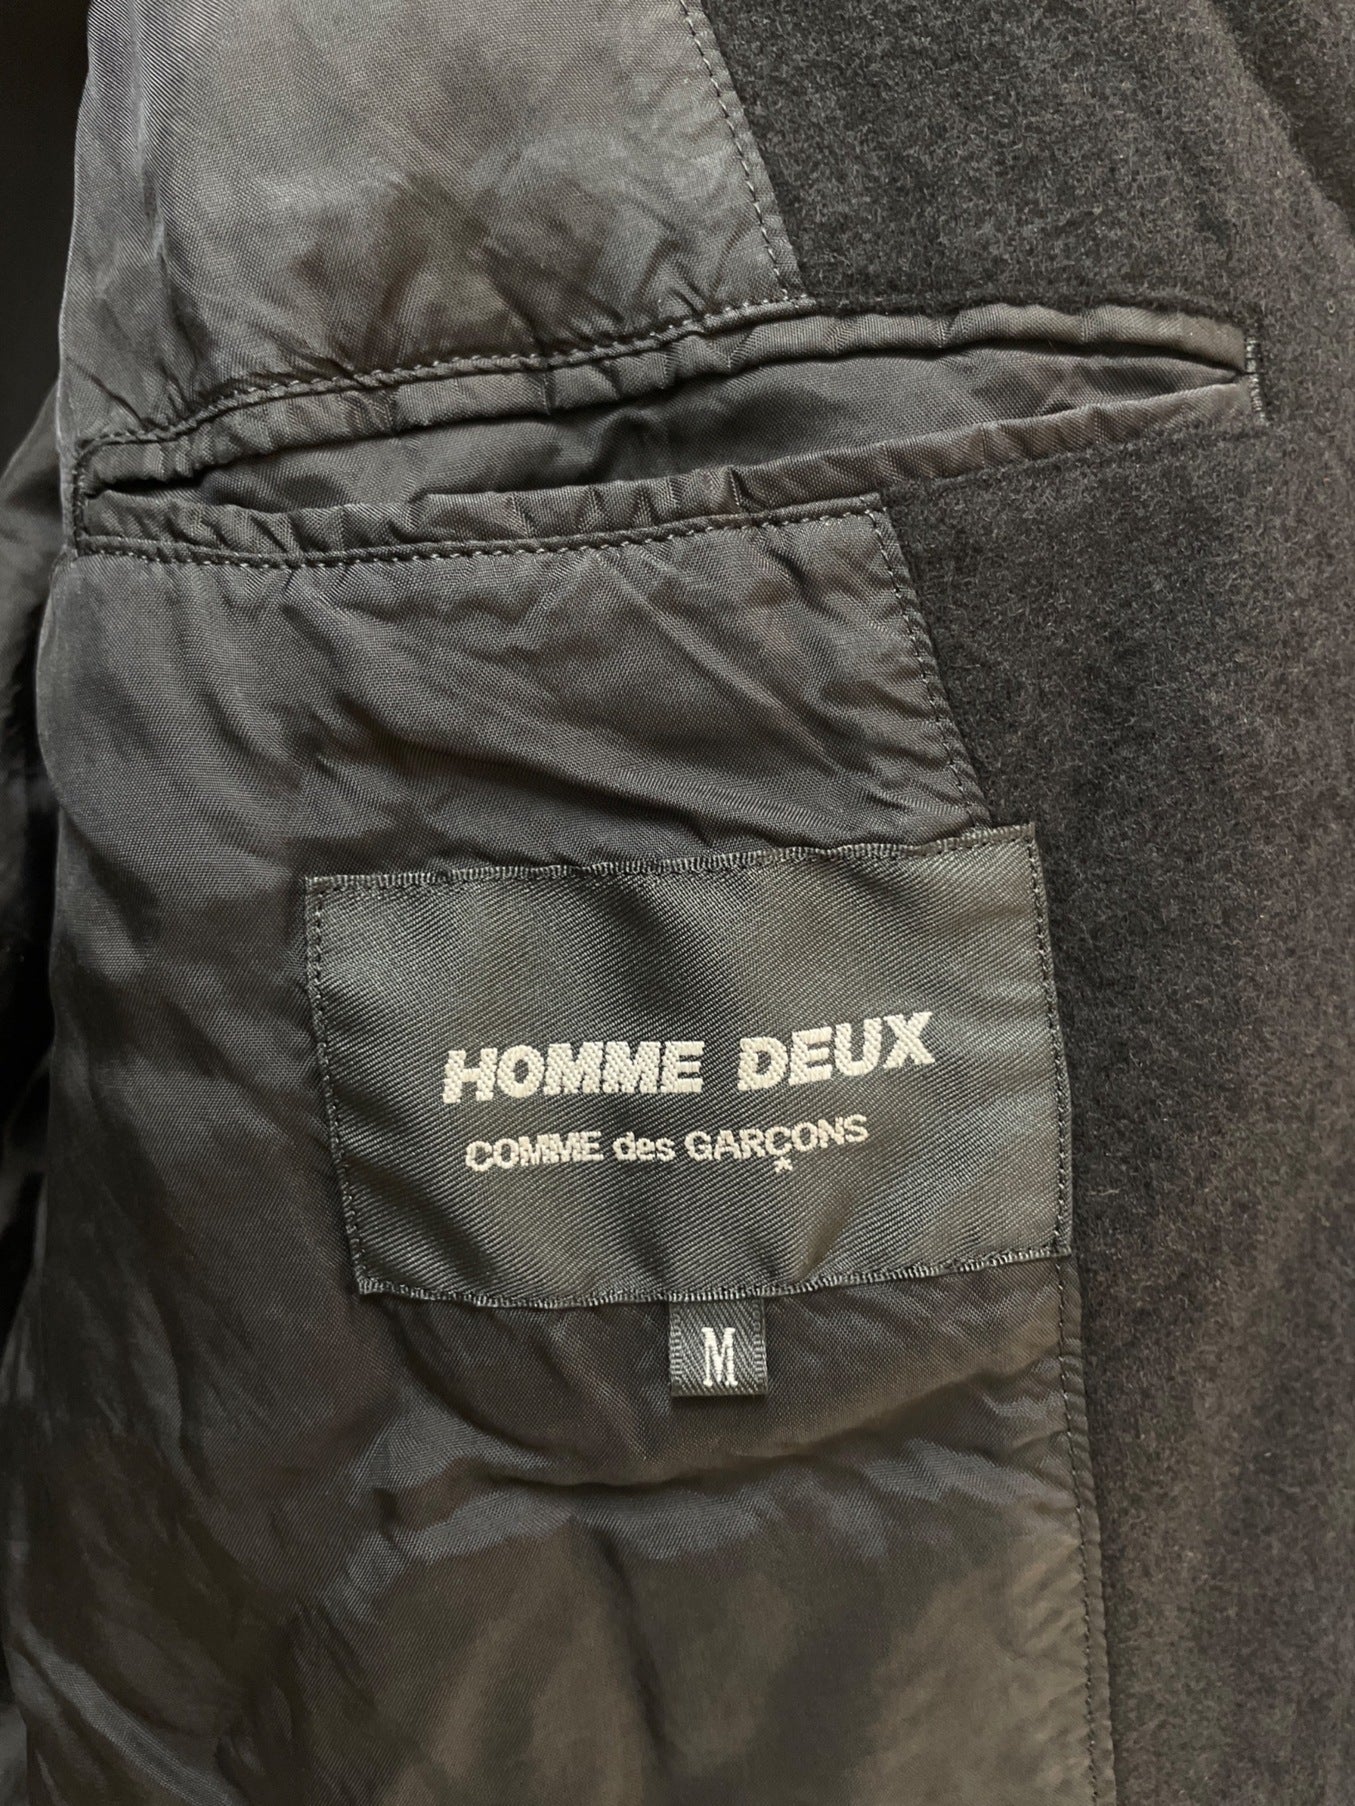 Comme des Garcons Homme Deux Wool产品成品夹克DD-J050